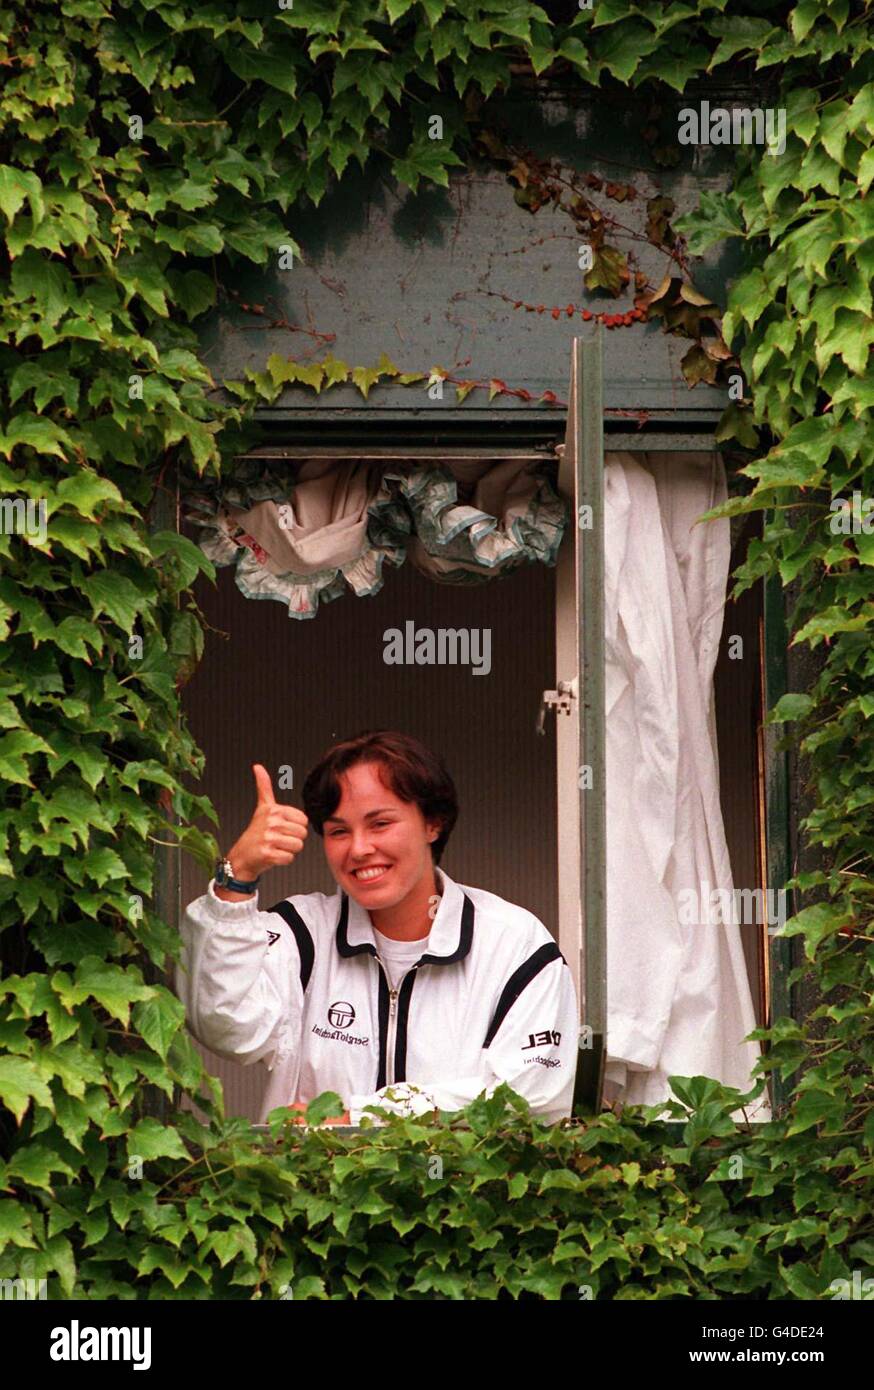 Martina Hingis, campione di donne di Wimbledon, dà i pollici ai bravoni quando è apparsa in una finestra del complesso di Wimbledon durante una pausa in gioco oggi (venerdì). Foto PA. Foto Stock